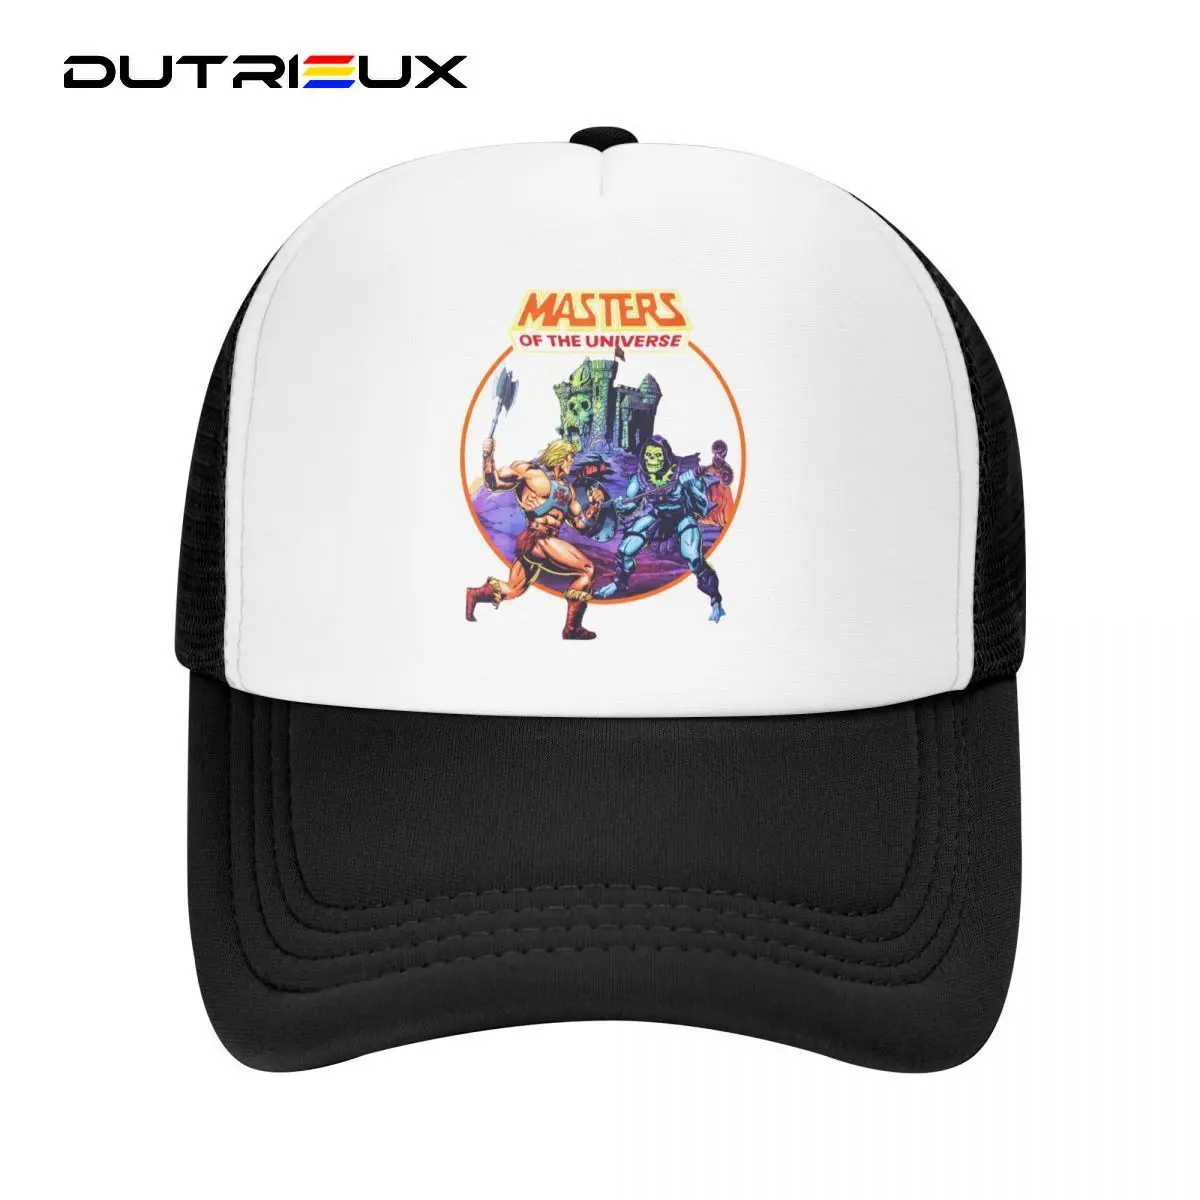 

DUTRIEUX He-Man And The Masters Of The Universe Trucker Hat Men Women Custom Adjustable Adult Baseball Cap Outdoor Snapback Caps